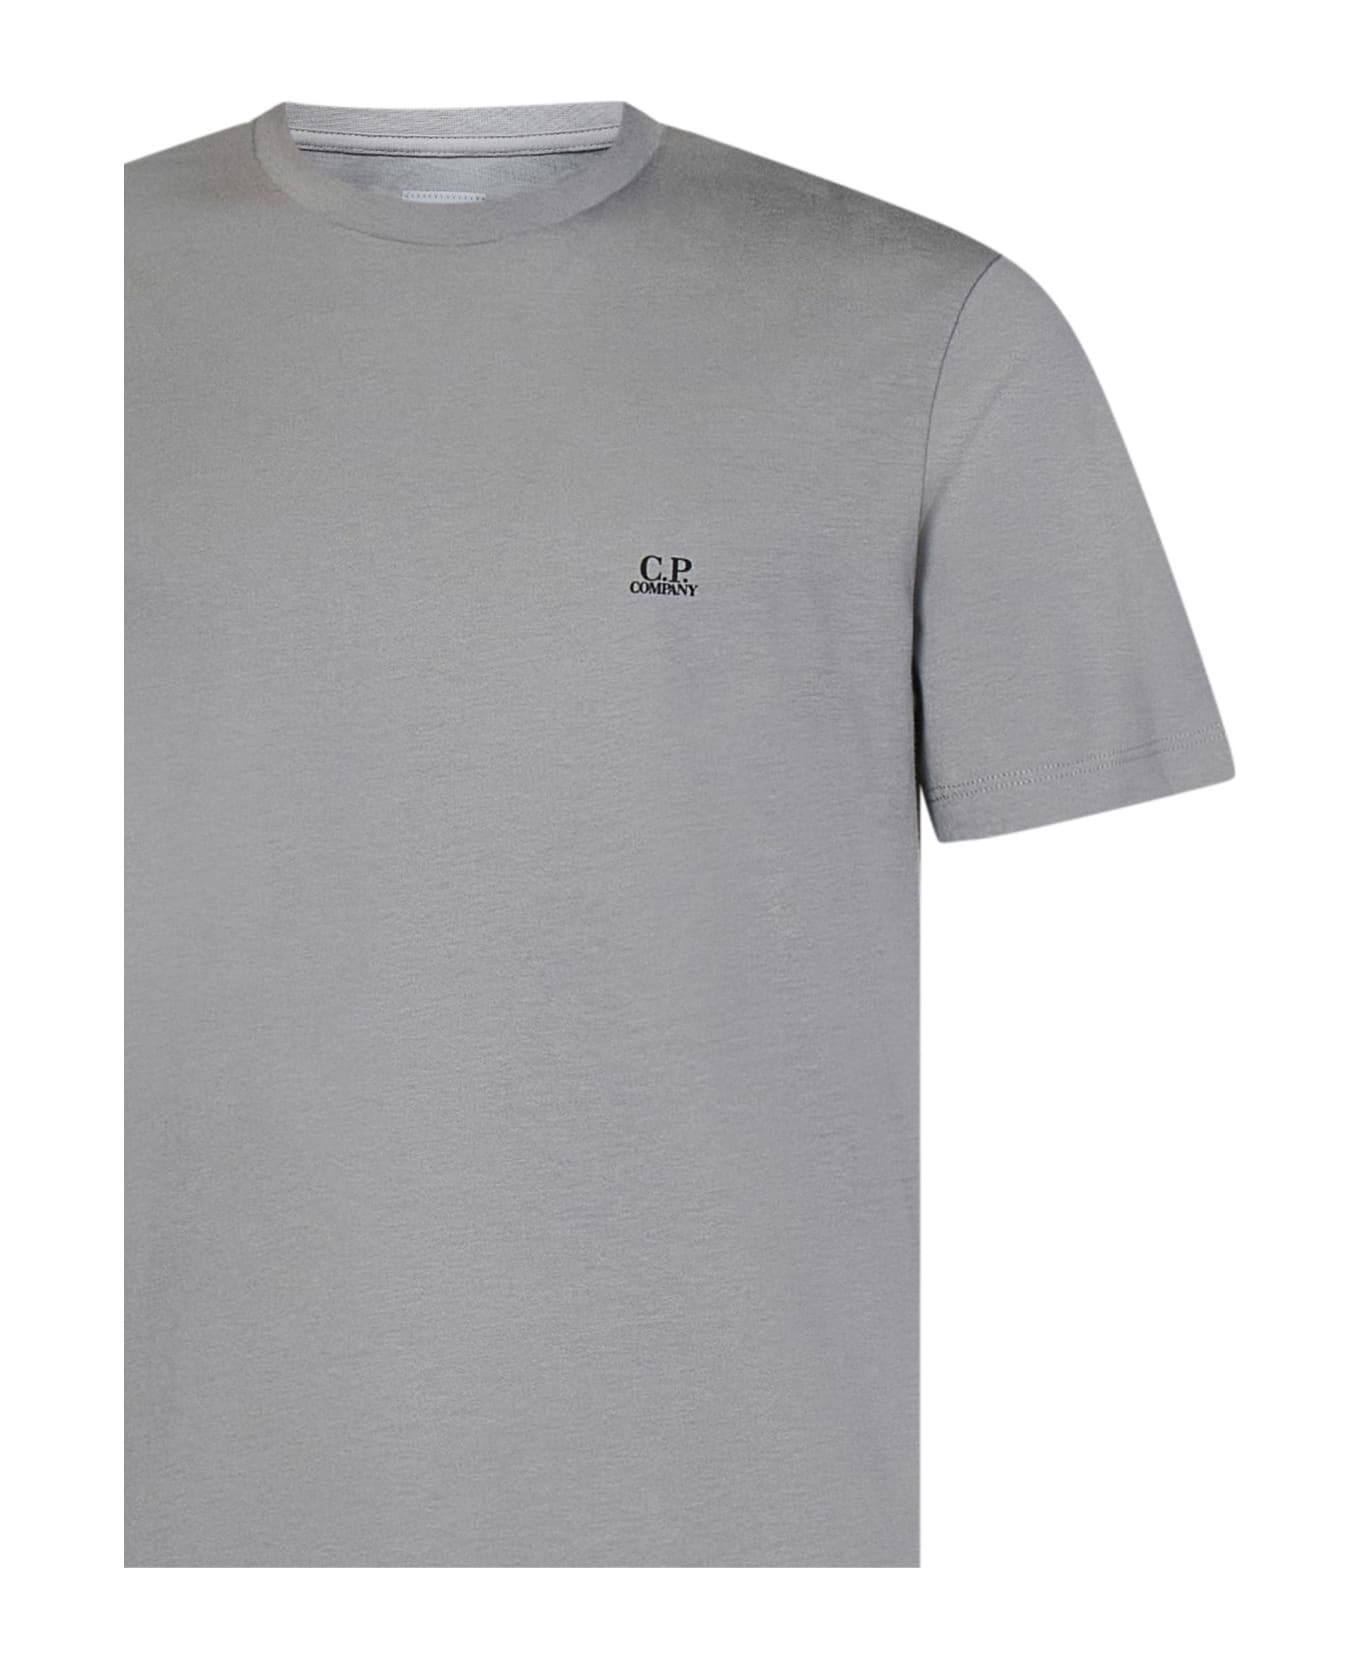 C.P. Company T-shirt - Grey